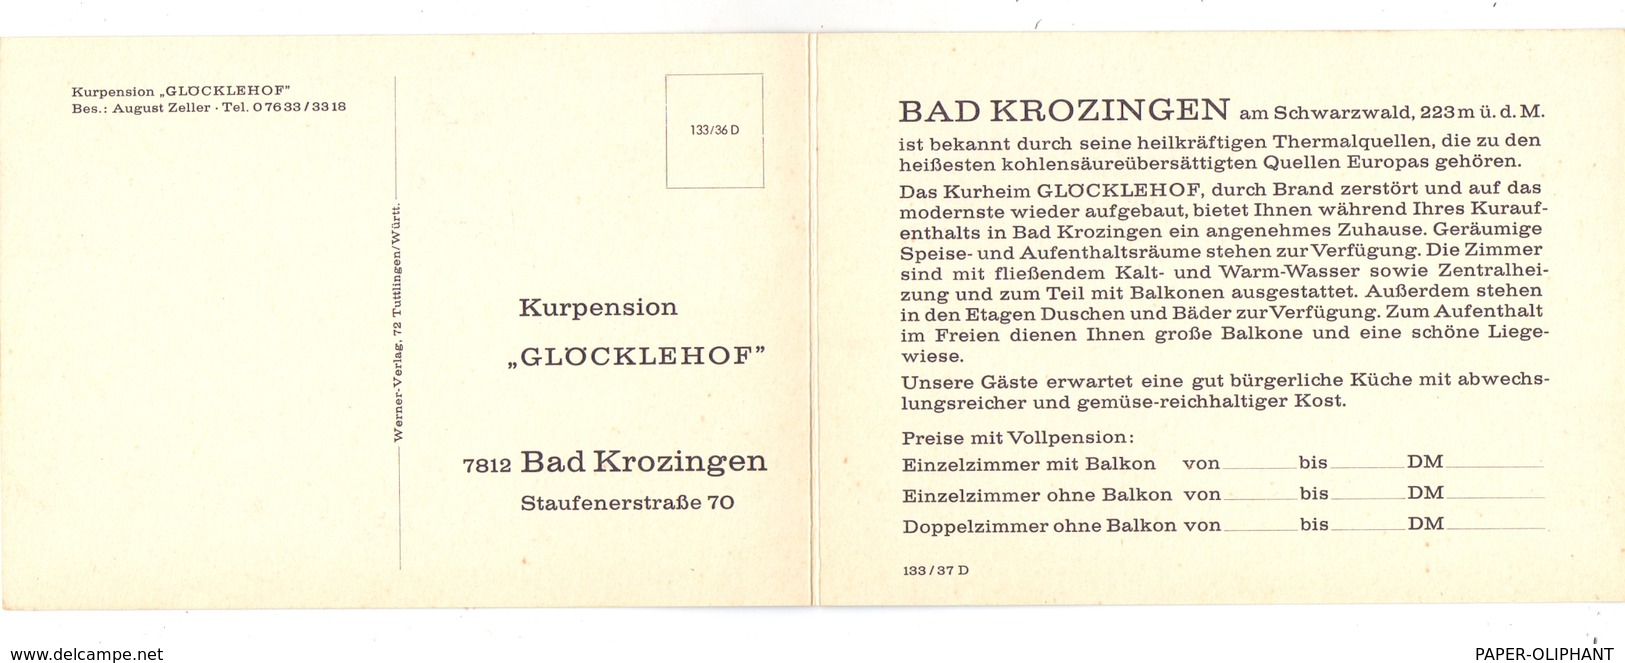 7812 BAD KROZINGEN, Kurpension GLÖCKLEHOF, Klapp-Karte - Bad Krozingen